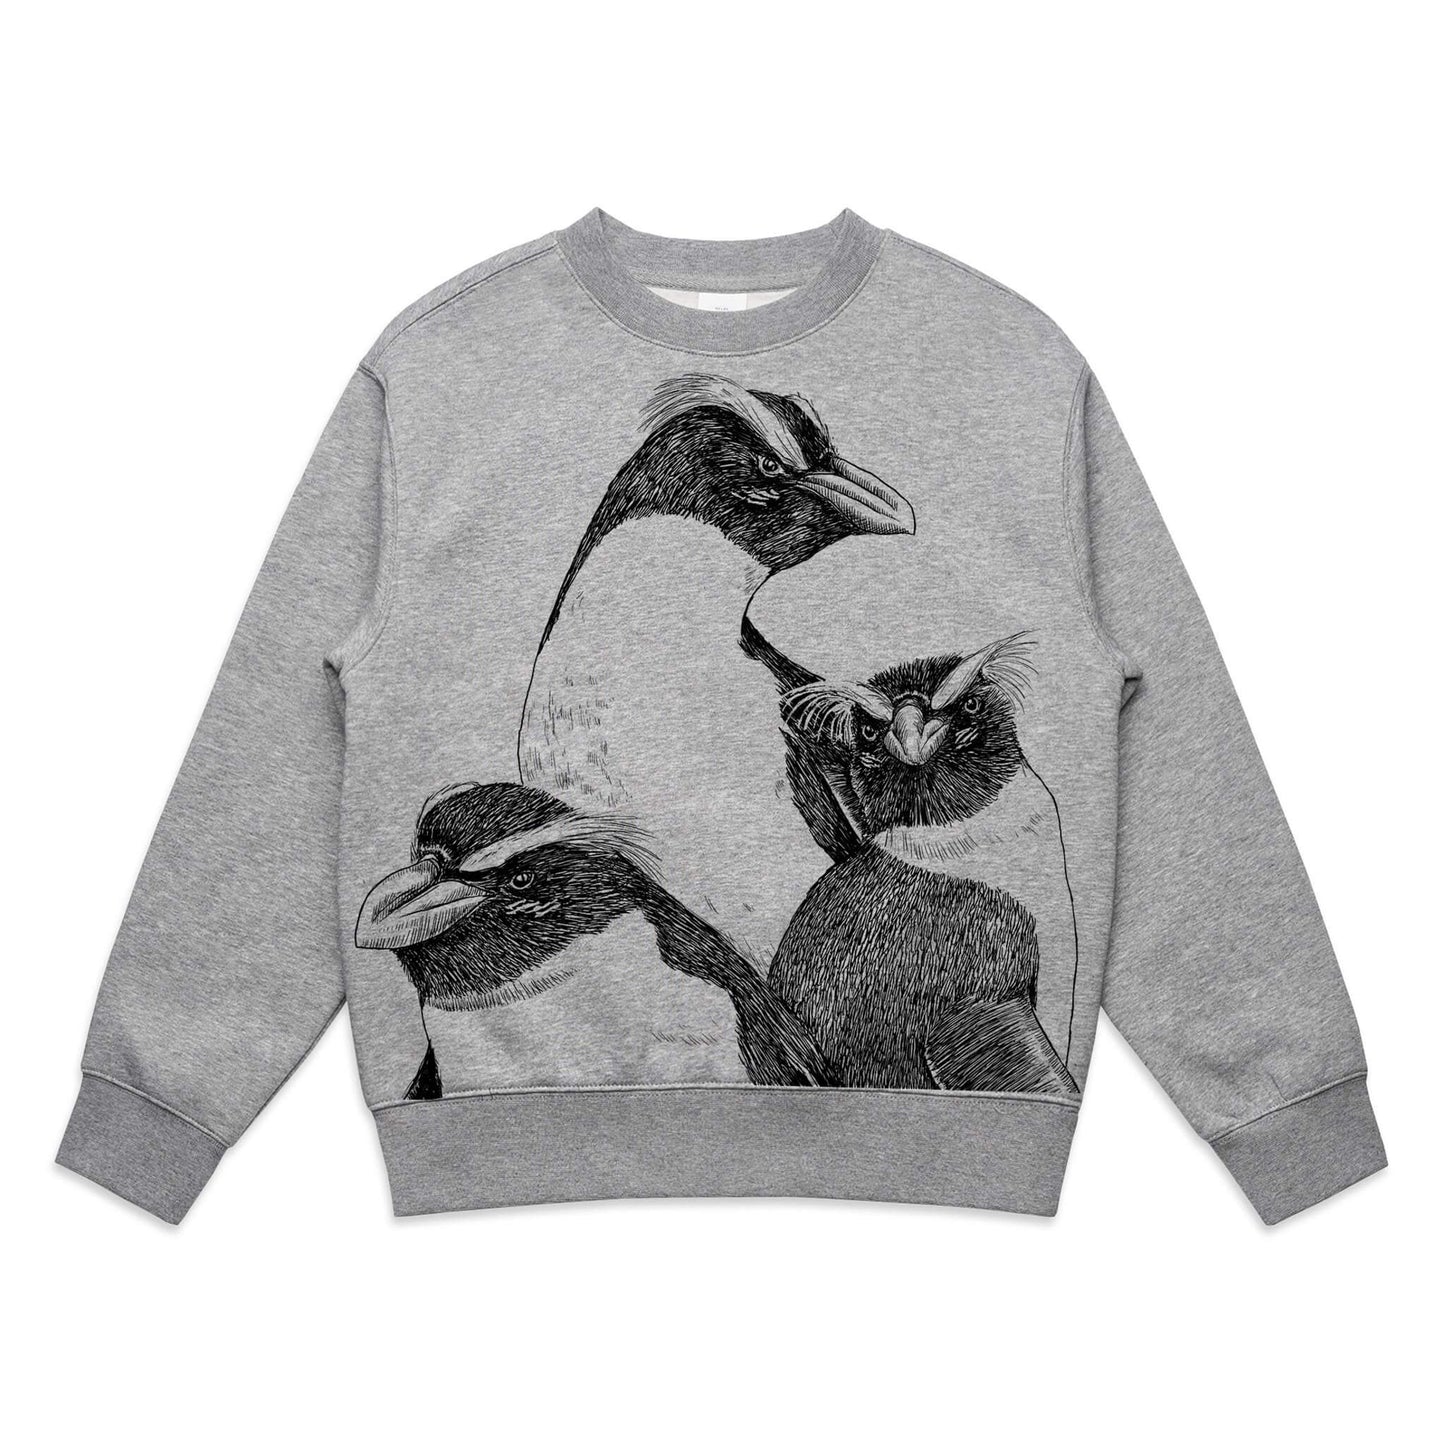 Tawaki/Fiordland Crested Penguin Kids' Sweatshirt